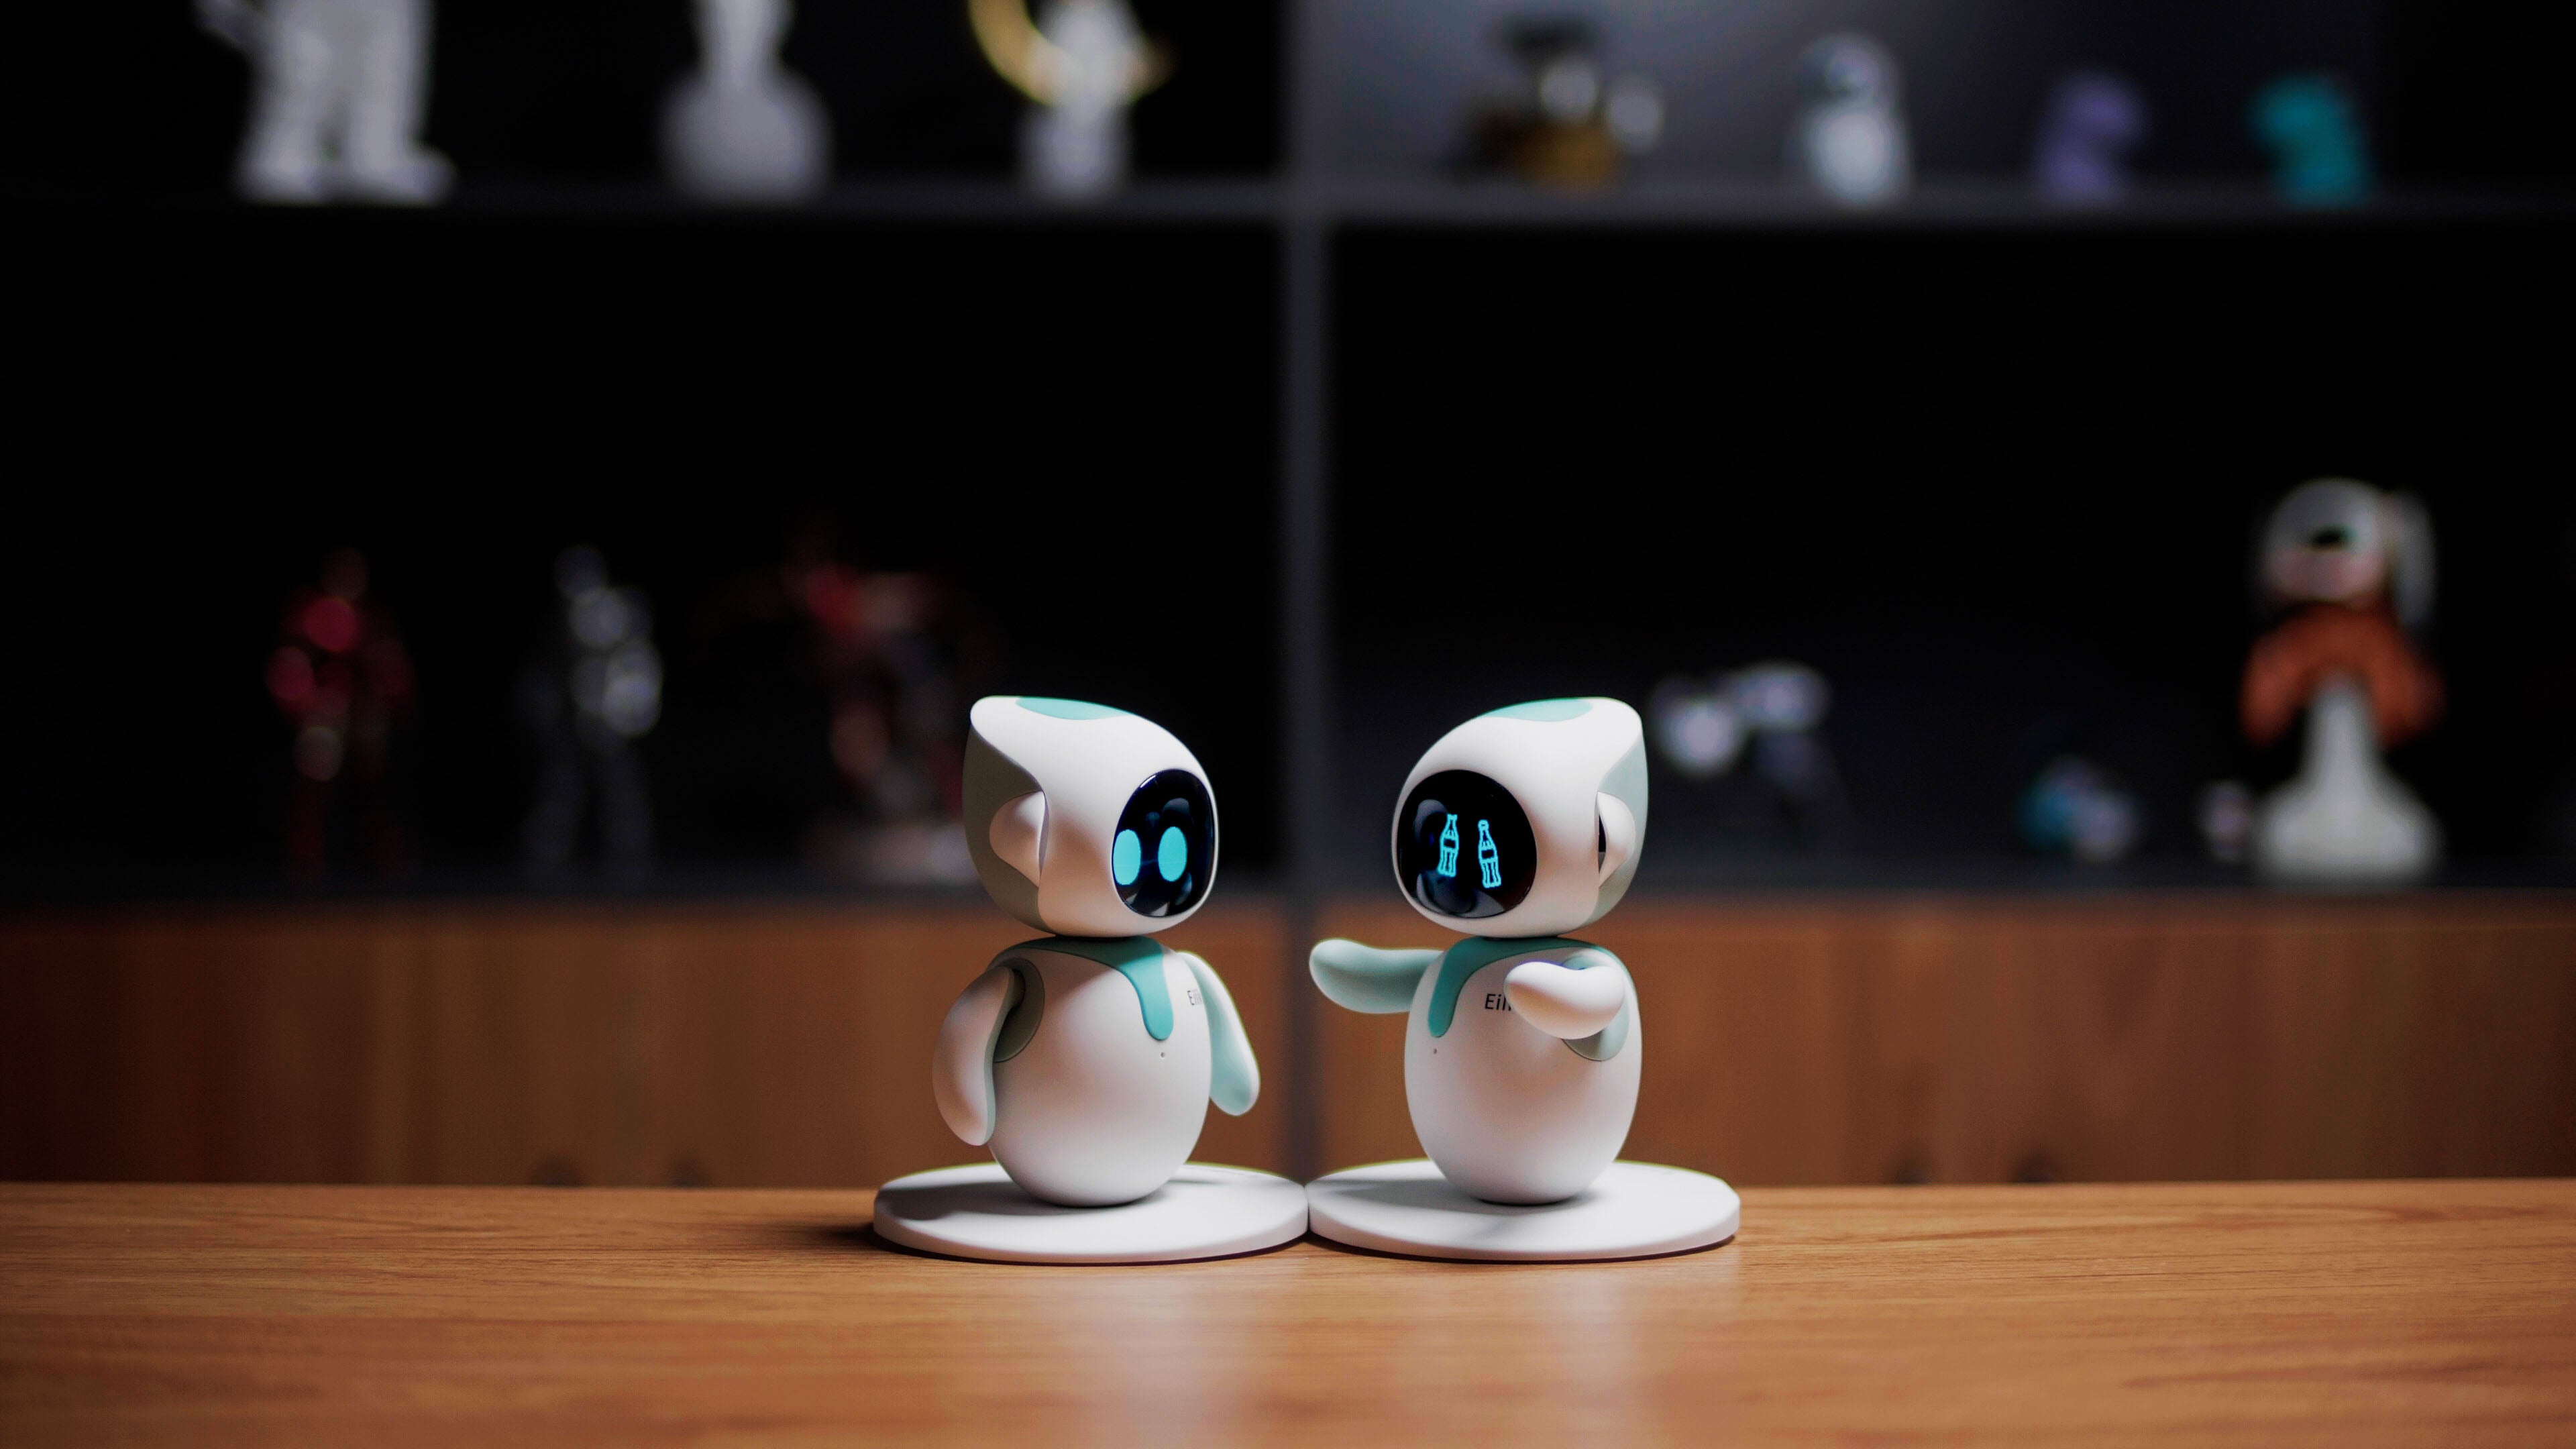 Eilik Robot: 5 Ways This Little Companion Bot Will Bring you Joy!